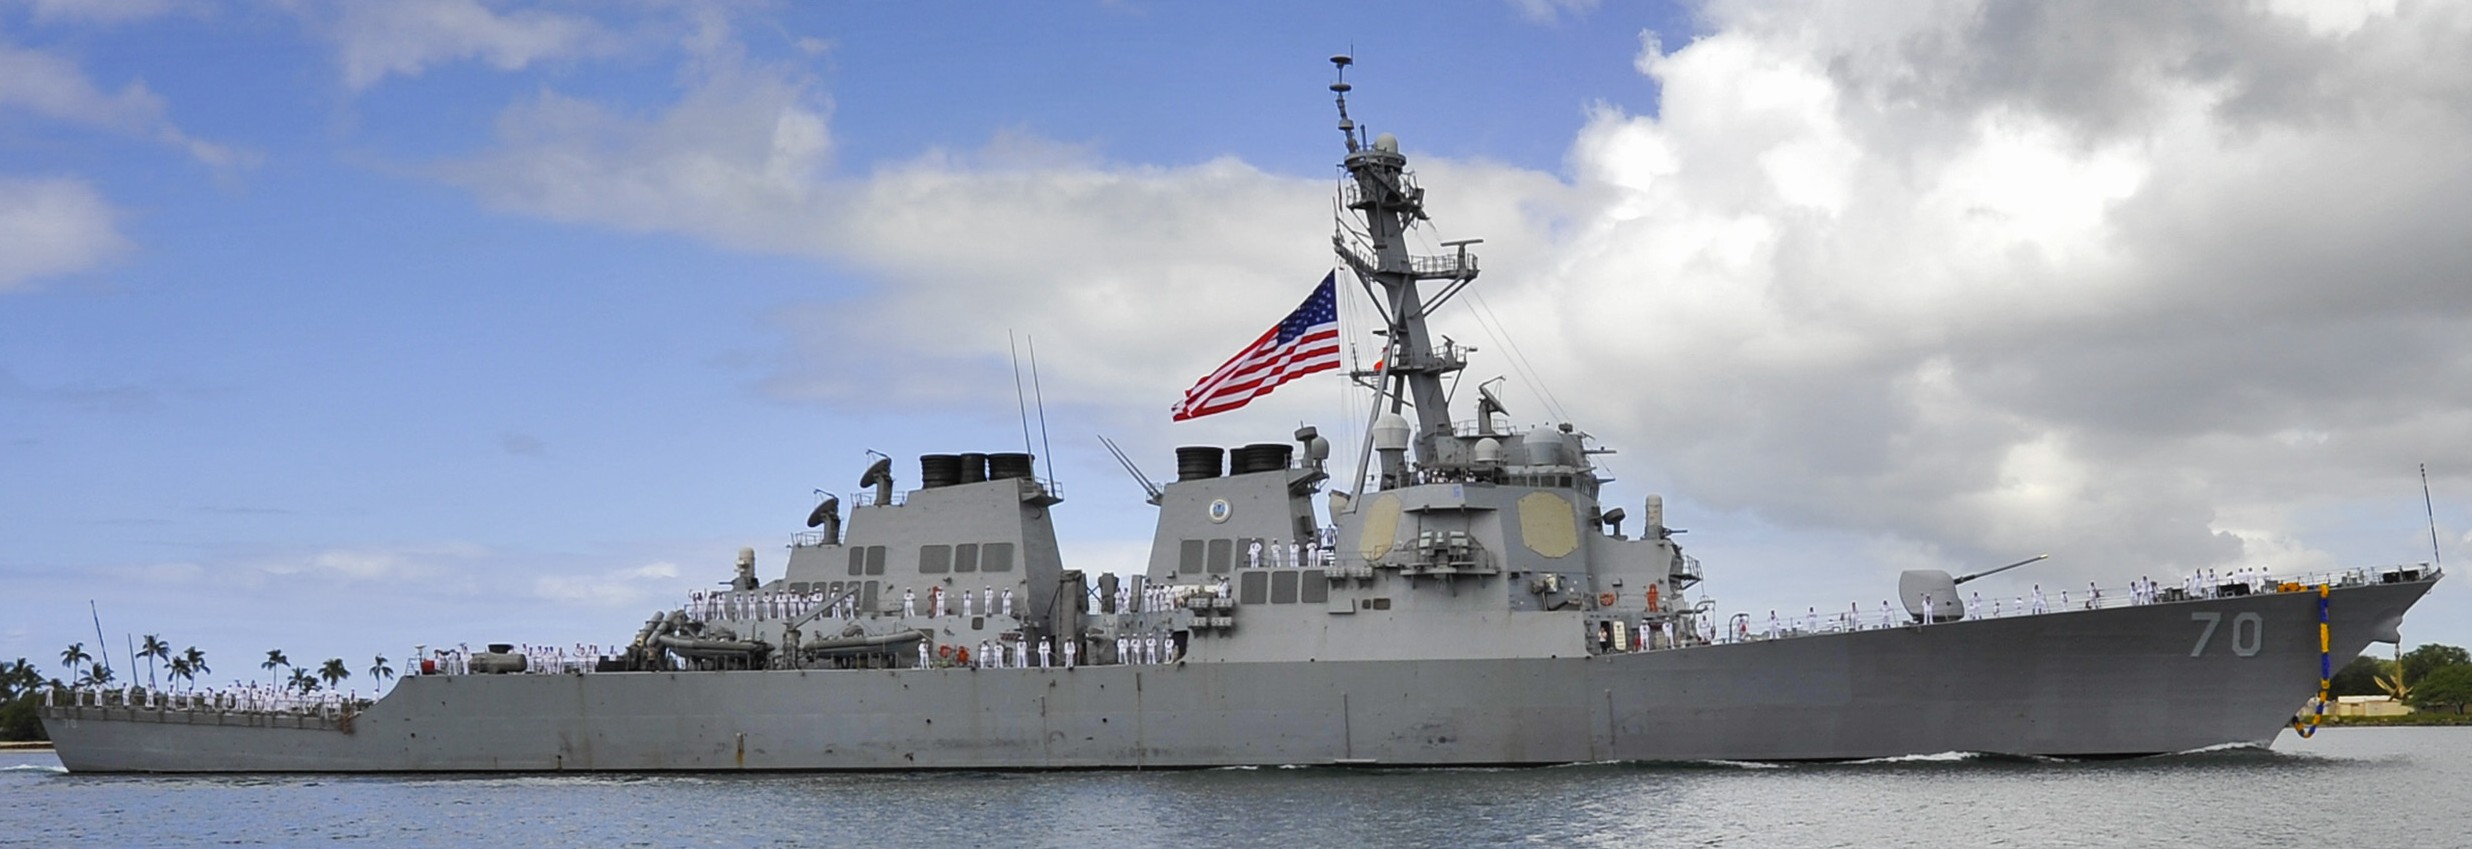 ddg-70 uss hopper guided missile destroyer arleigh burke class aegis bmd 18 pearl harbor hawaii